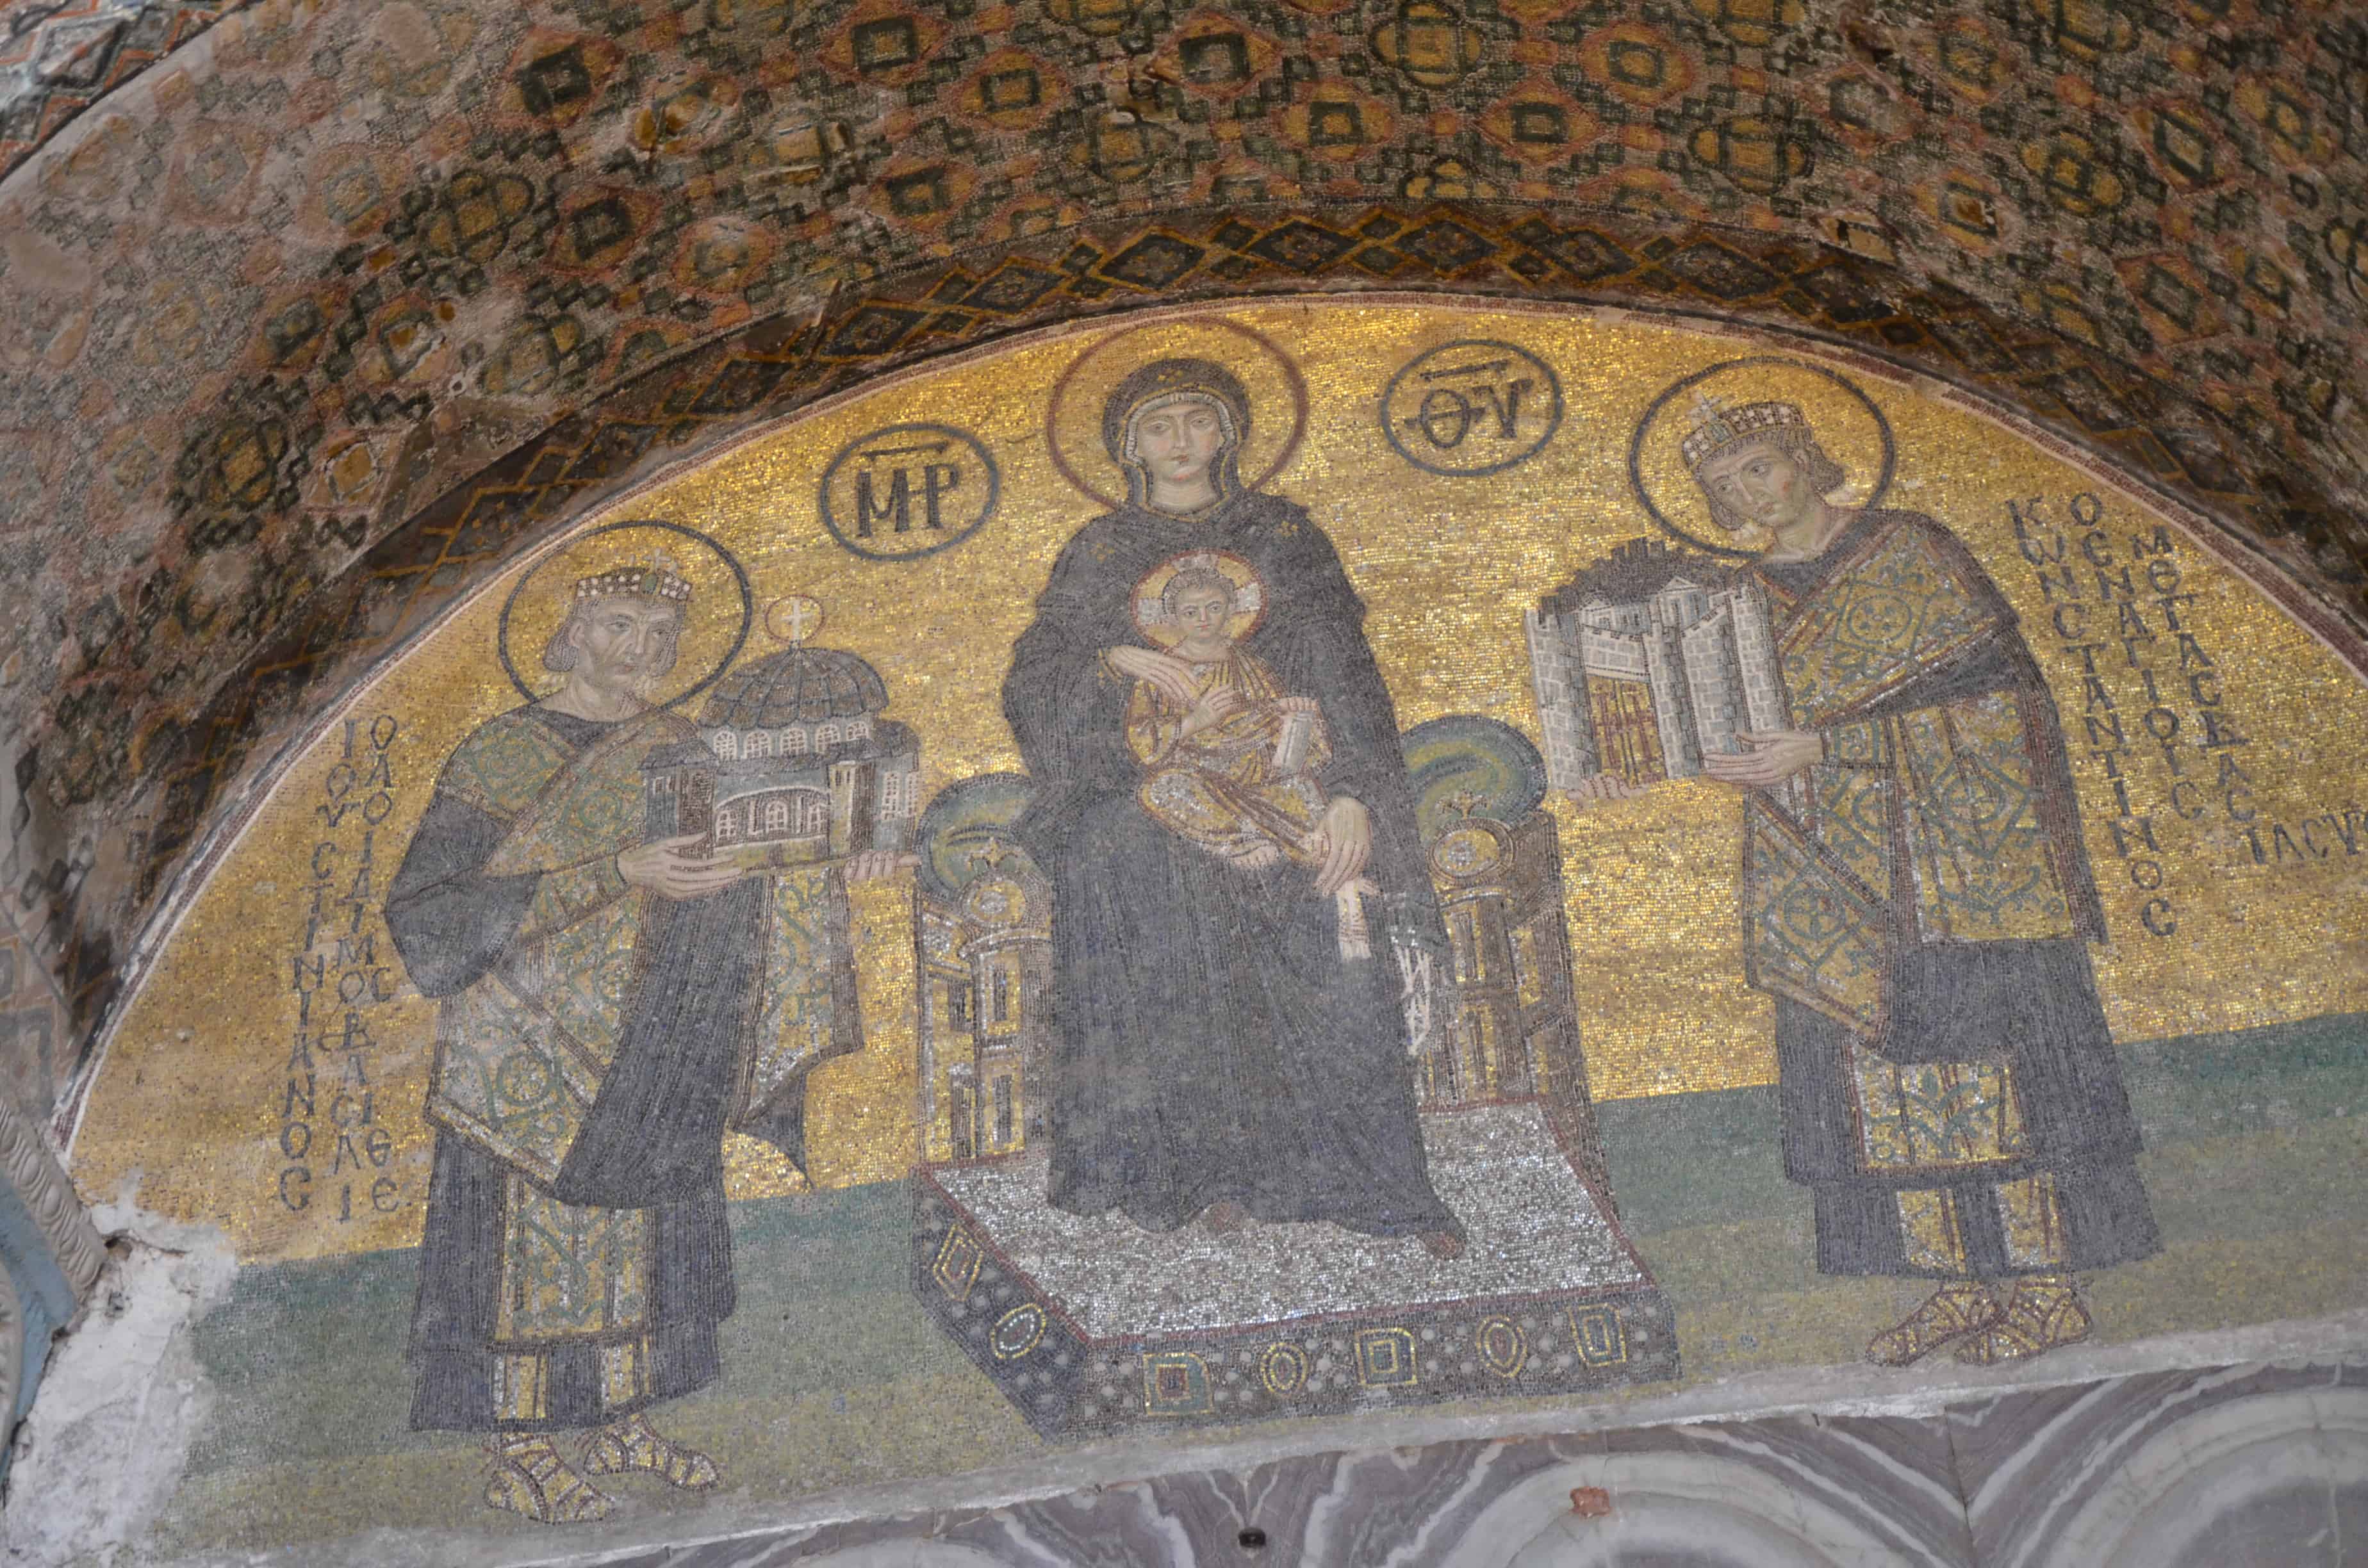 Southwest vestibule door mosaic at Hagia Sophia in Istanbul, Turkey